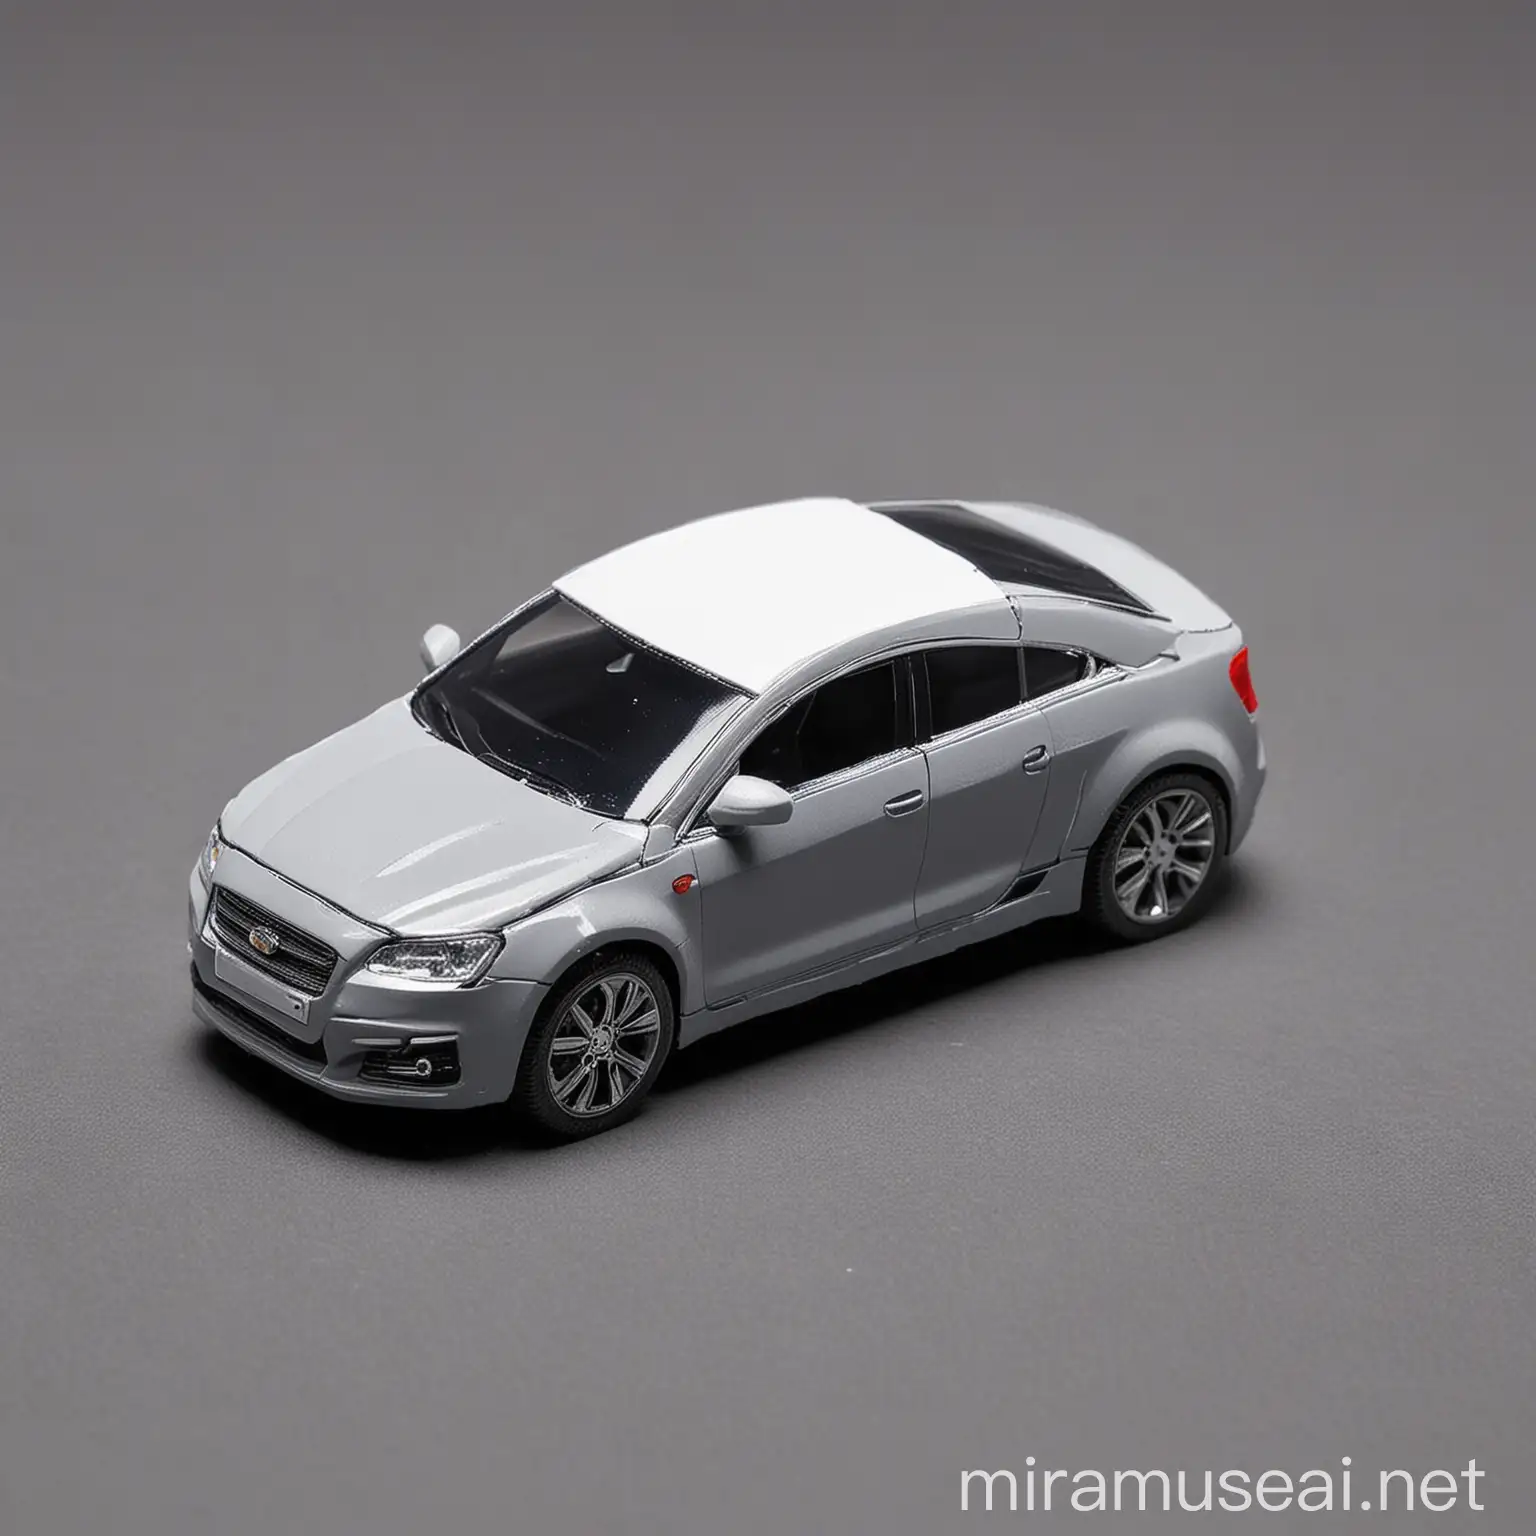 Miniature Modern Gray Car in Urban Setting